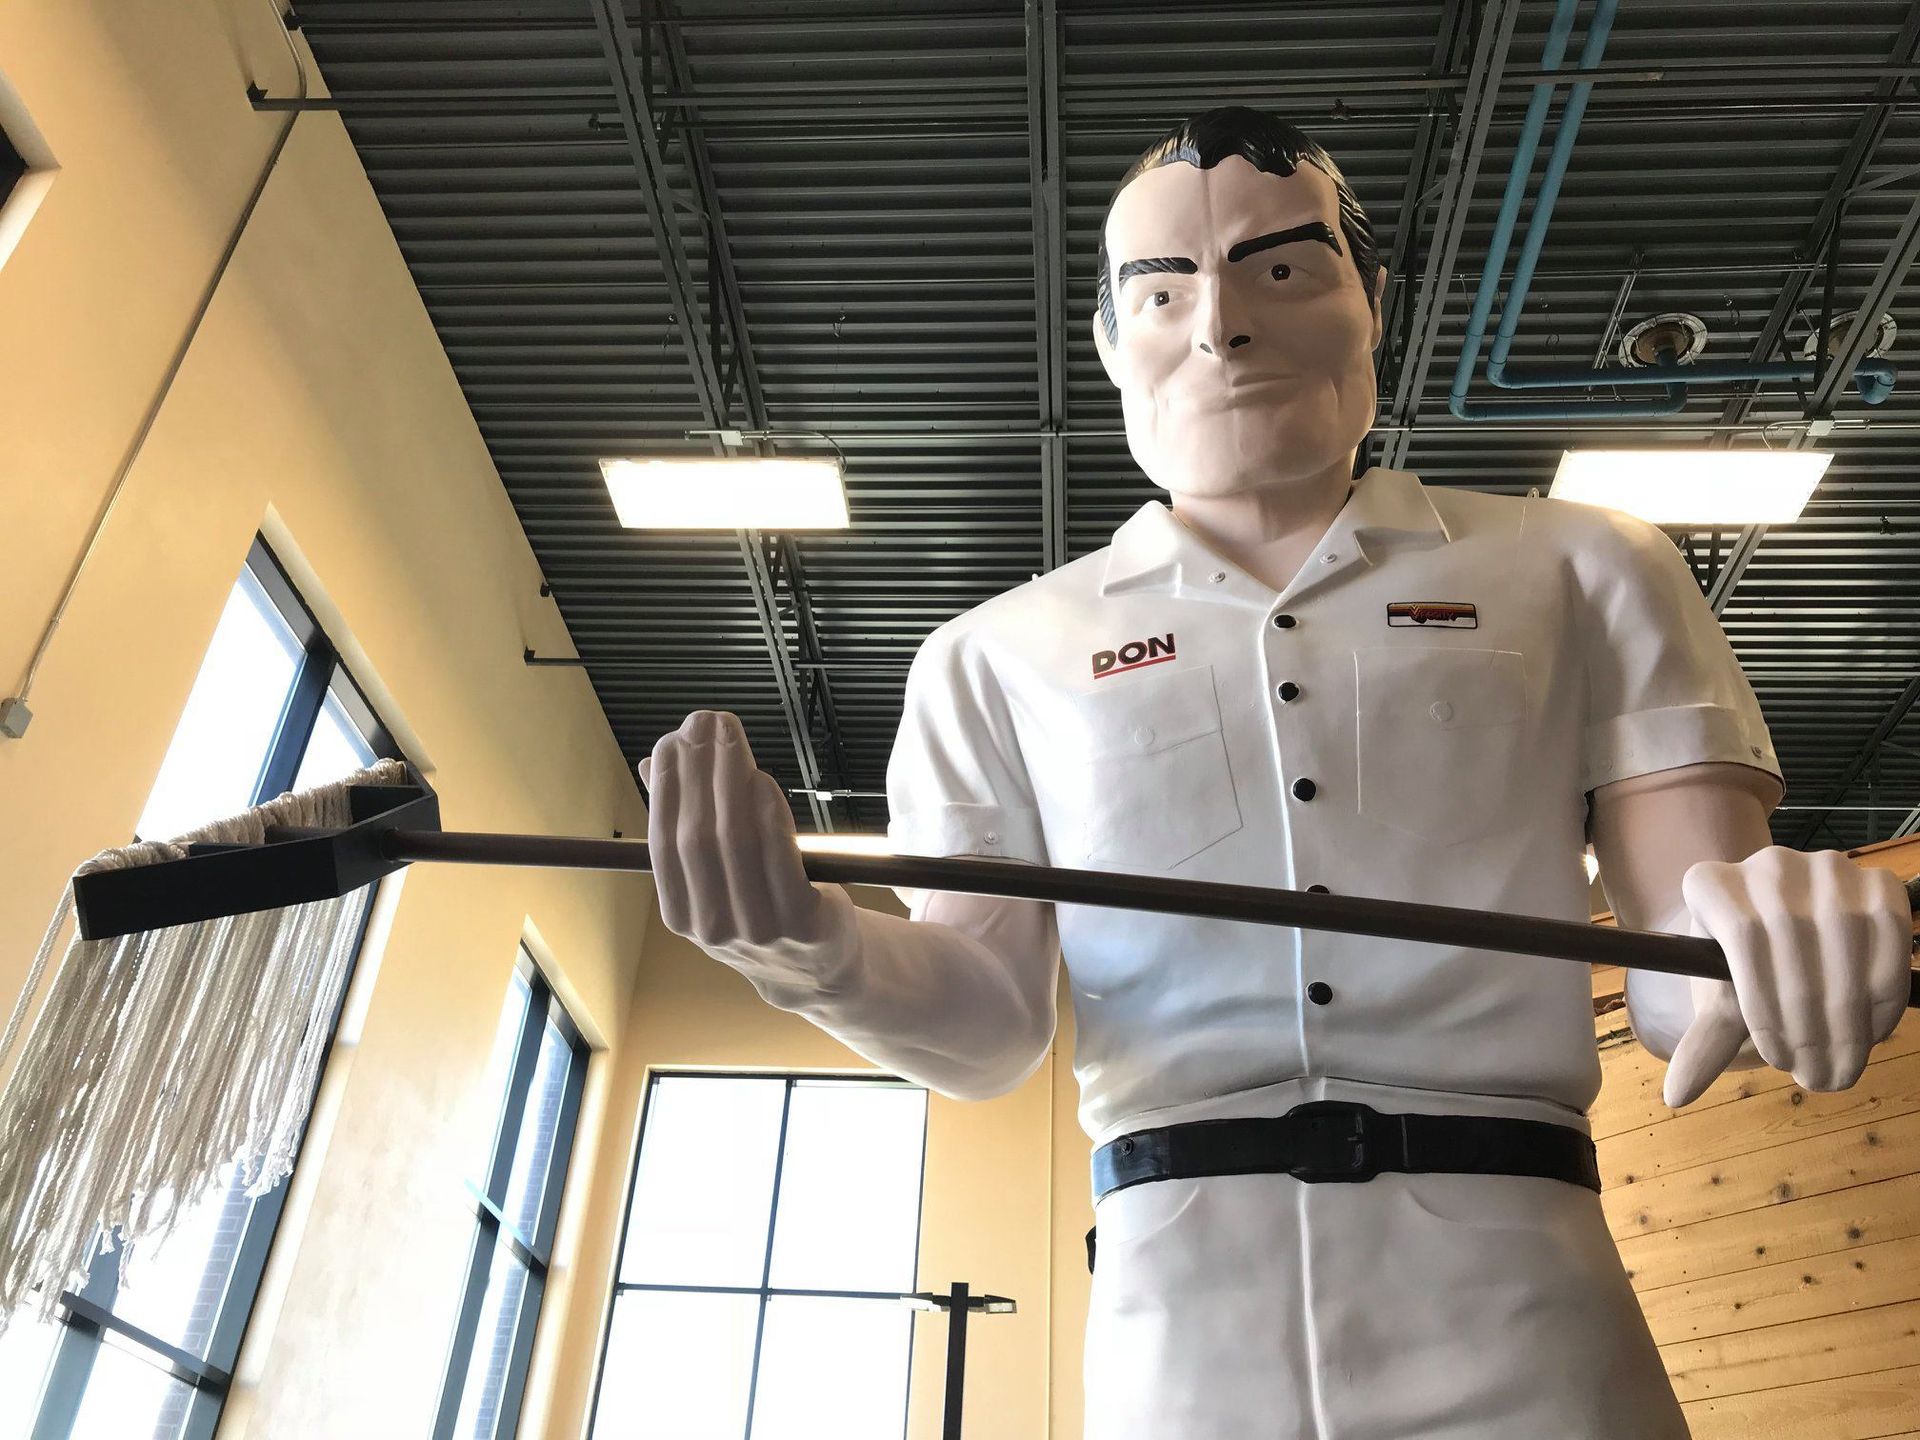 
World's Largest Janitor Statue, world record in Pocatello, Idaho